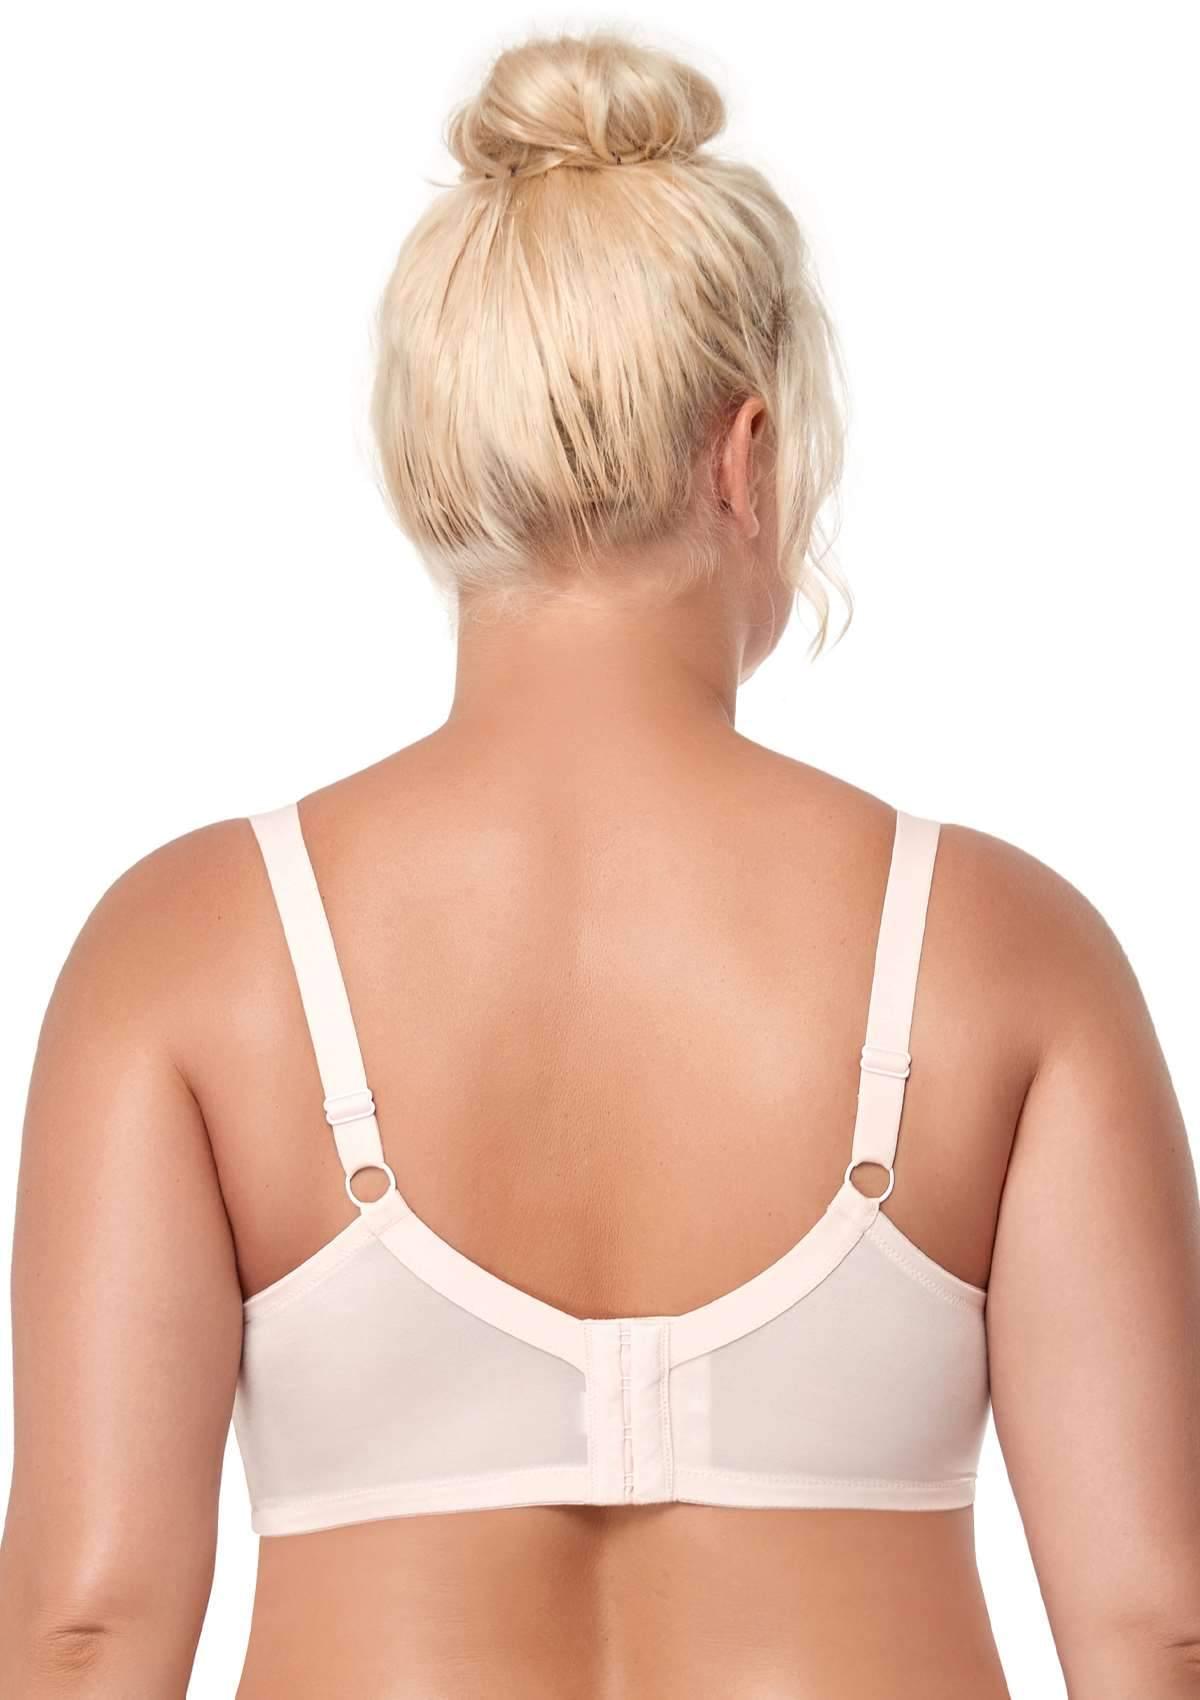 HSIA Blossom Matching Lacey Underwear And Bra Set: Sexy Lace Bra - Dusty Peach / 36 / DDD/F